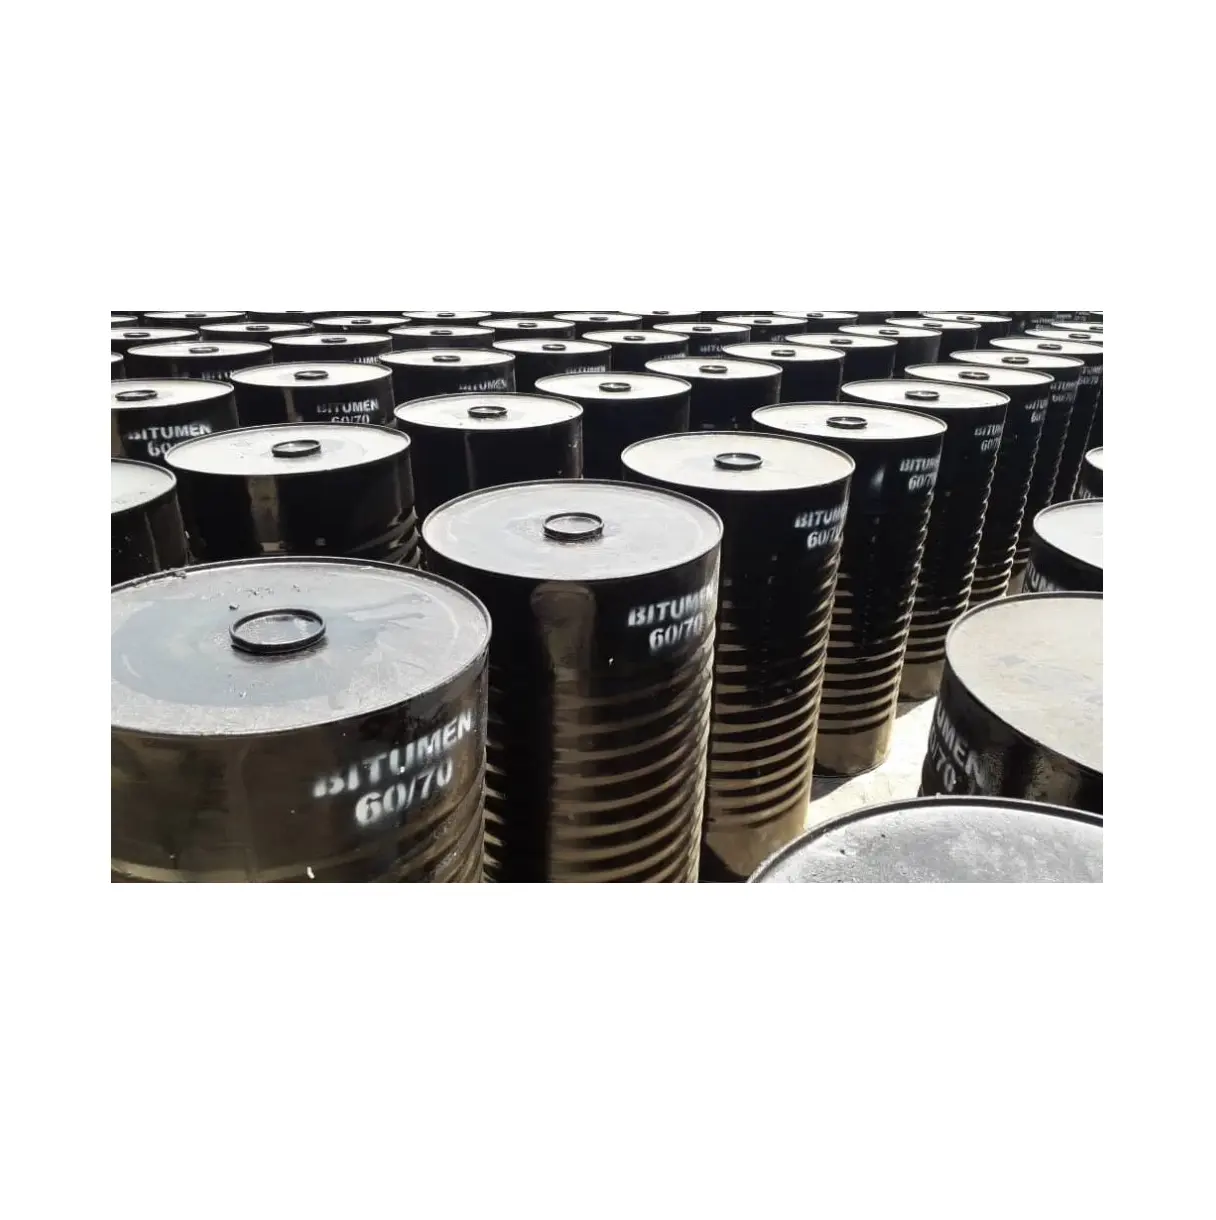 Hot Selling Price Of Petroleum Products Bitumen 60/70 Drum Packed Asphaltic Bitumen In Bulk Quantity